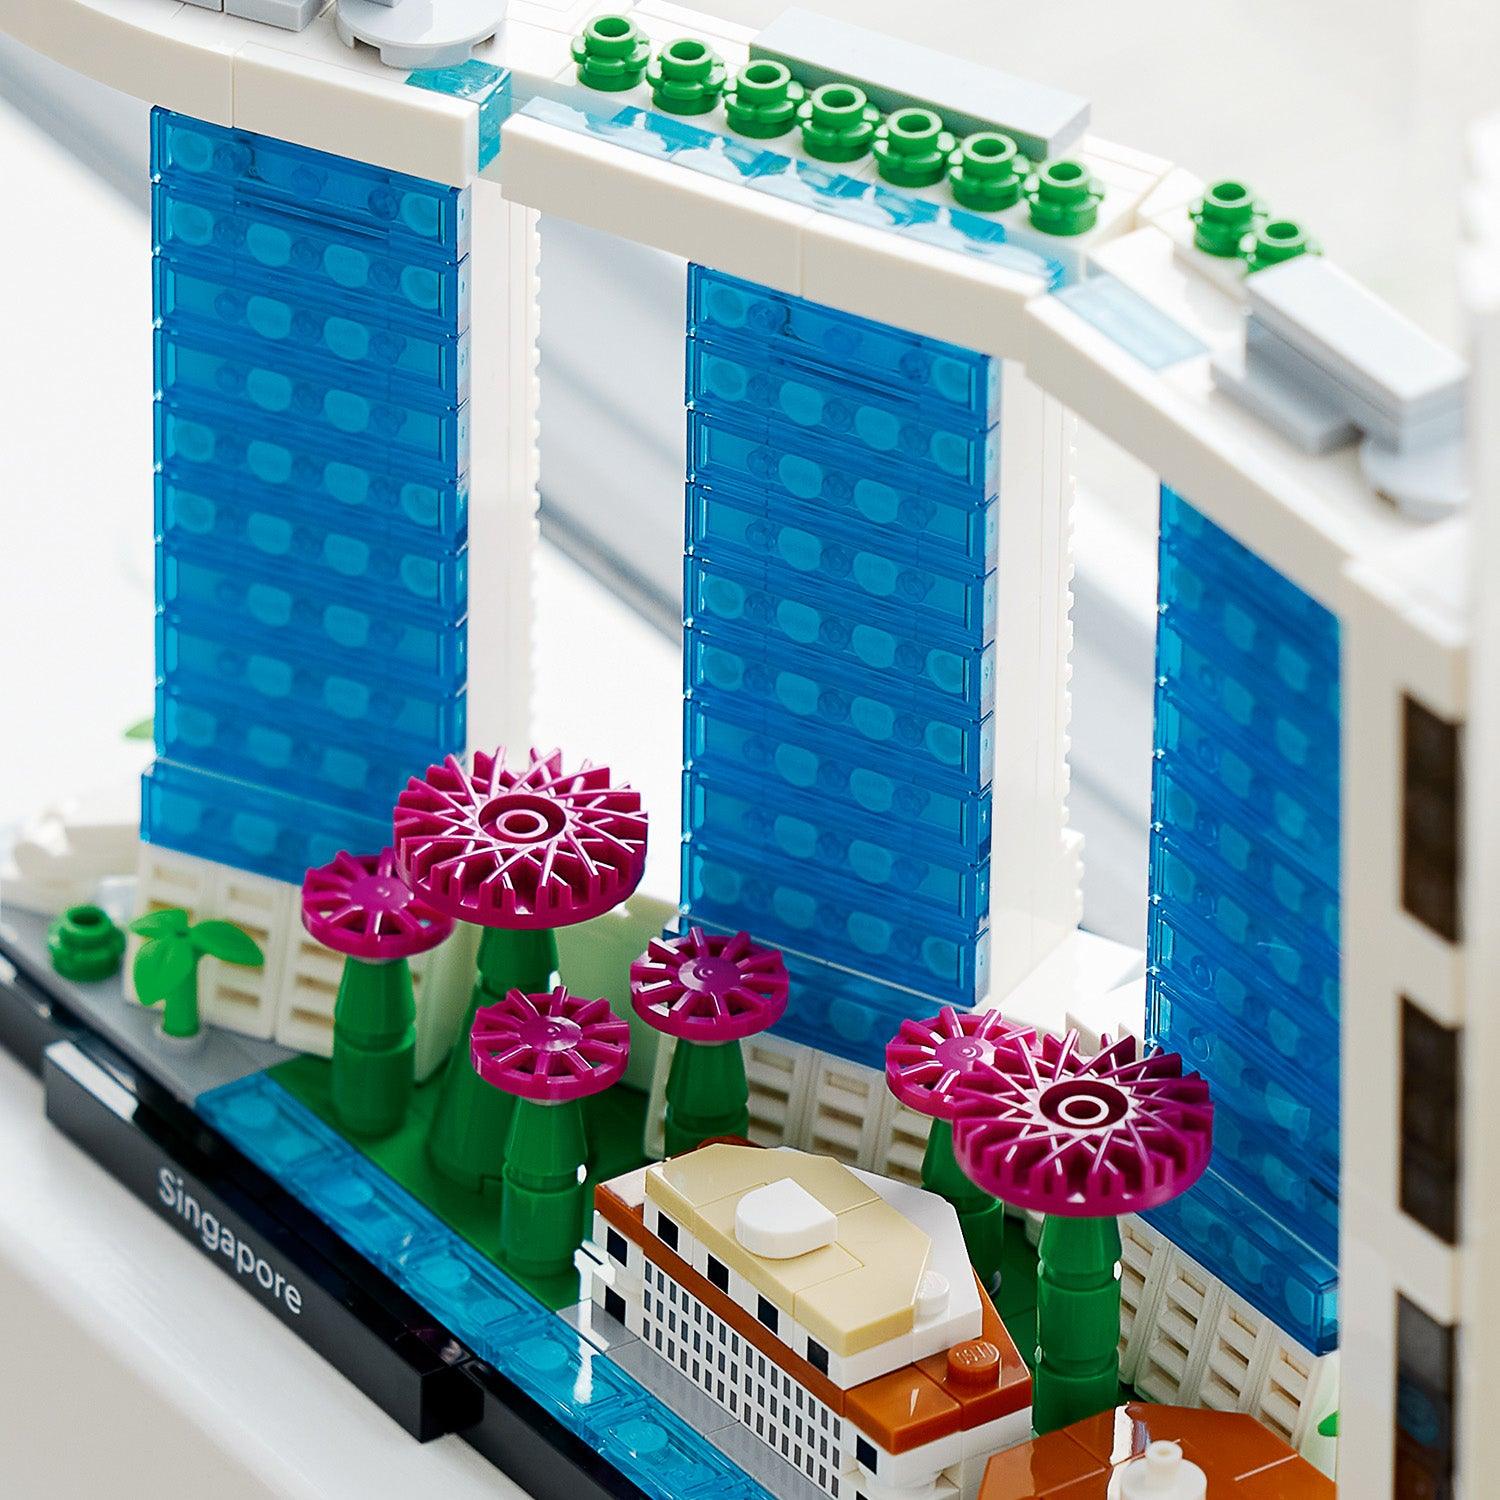 LEGO De Singapore Skyline 21057 Architecture LEGO ARCHITECTURE @ 2TTOYS LEGO €. 49.99